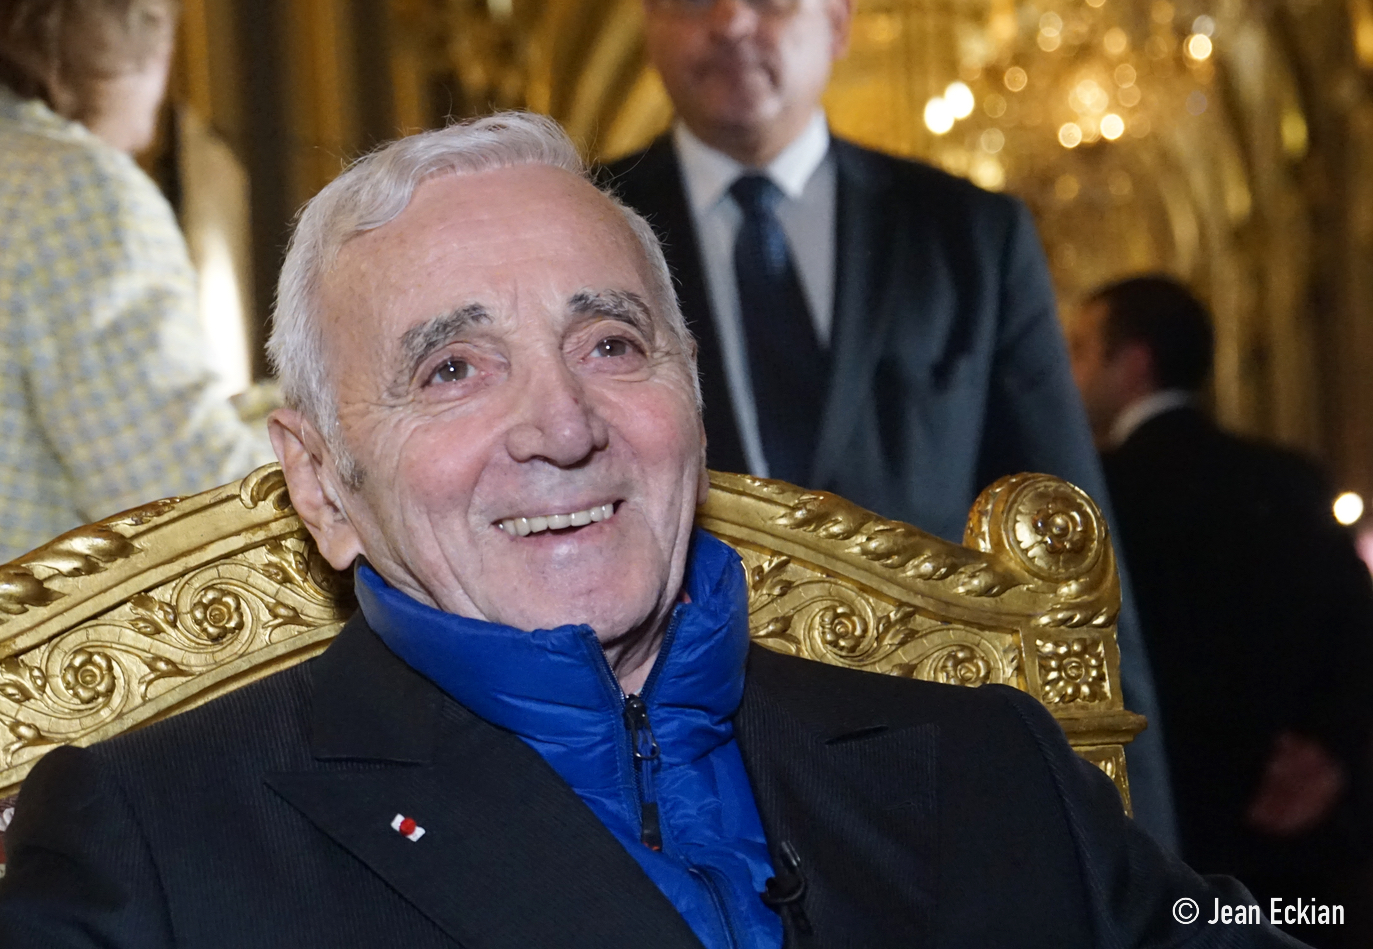 30 years ago, Charles Aznavour for Armenia